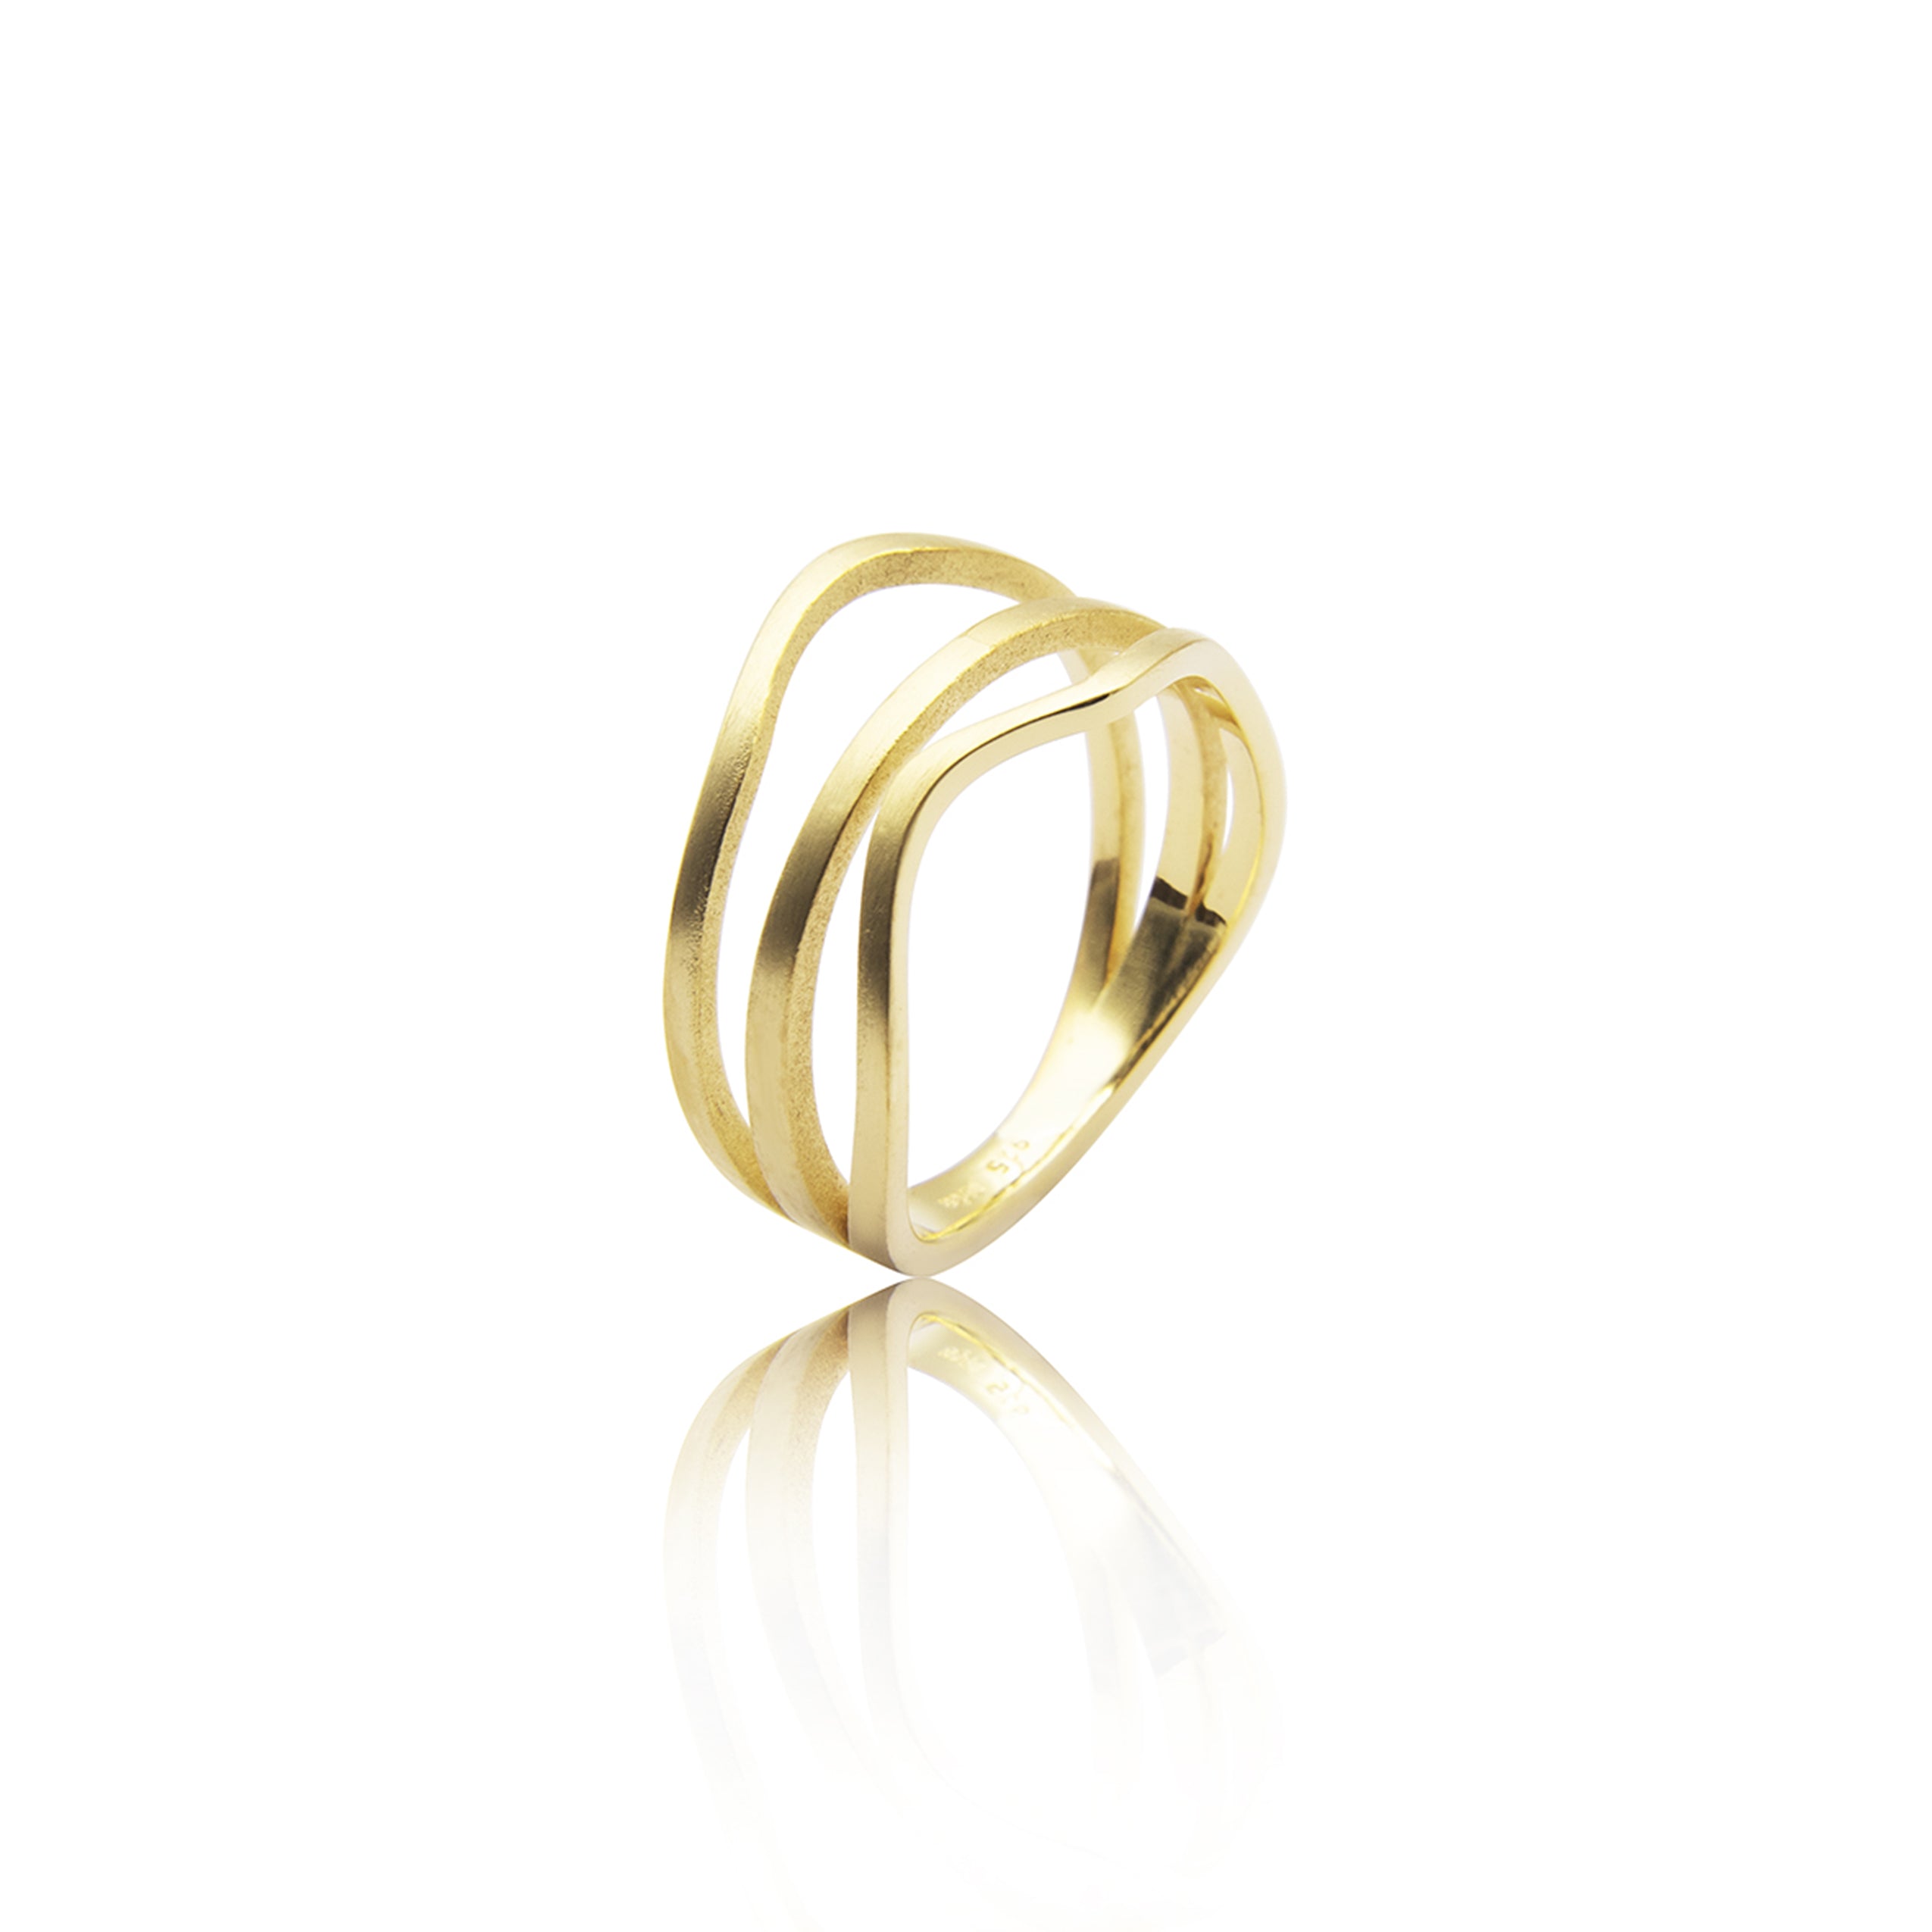 Cascade ring "3" in 585/- goud